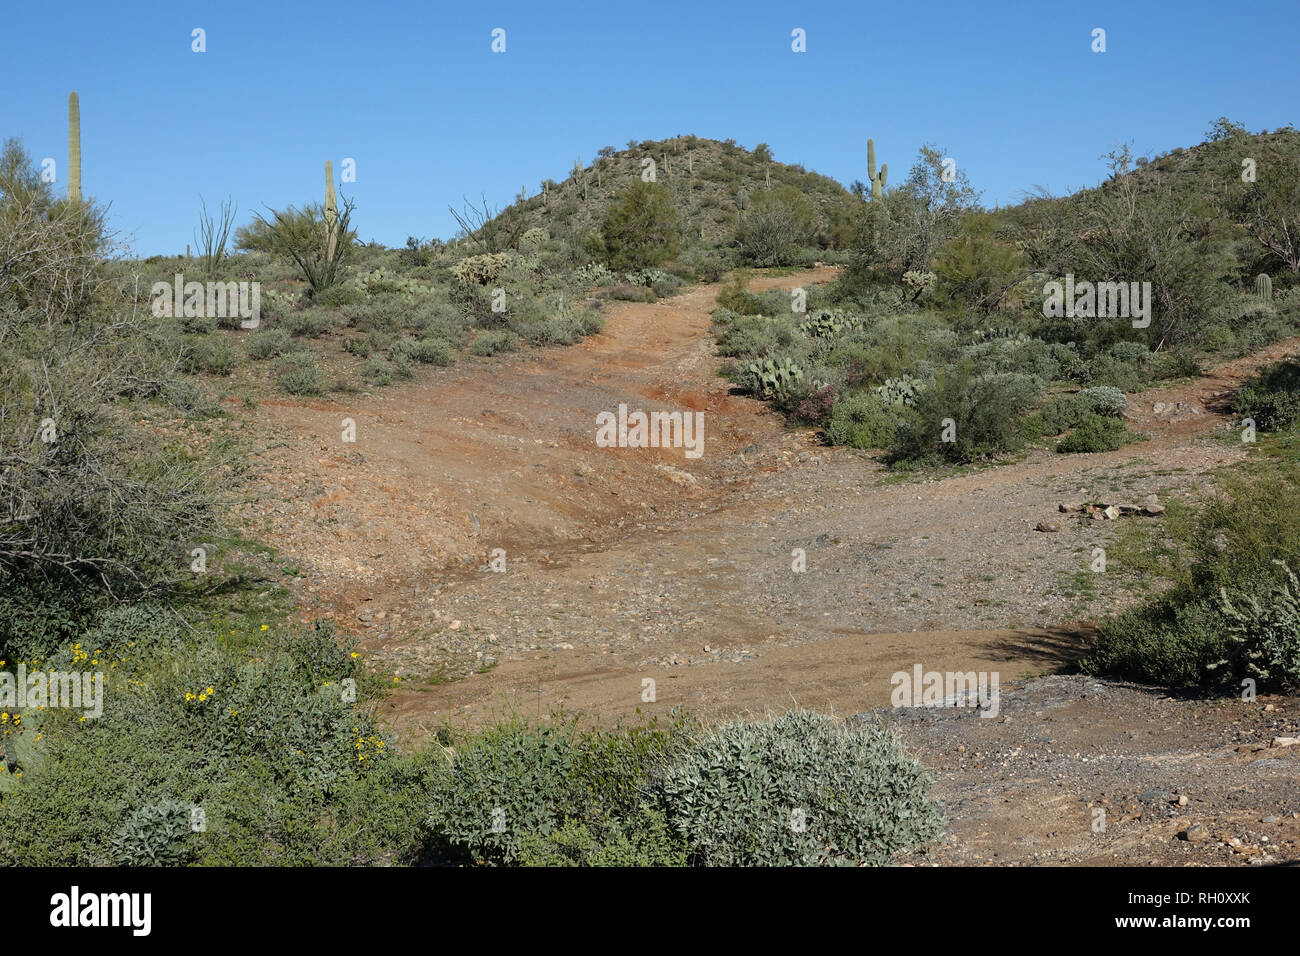 A view of a dirt road that runs through the Arizona desert. Stock Photo